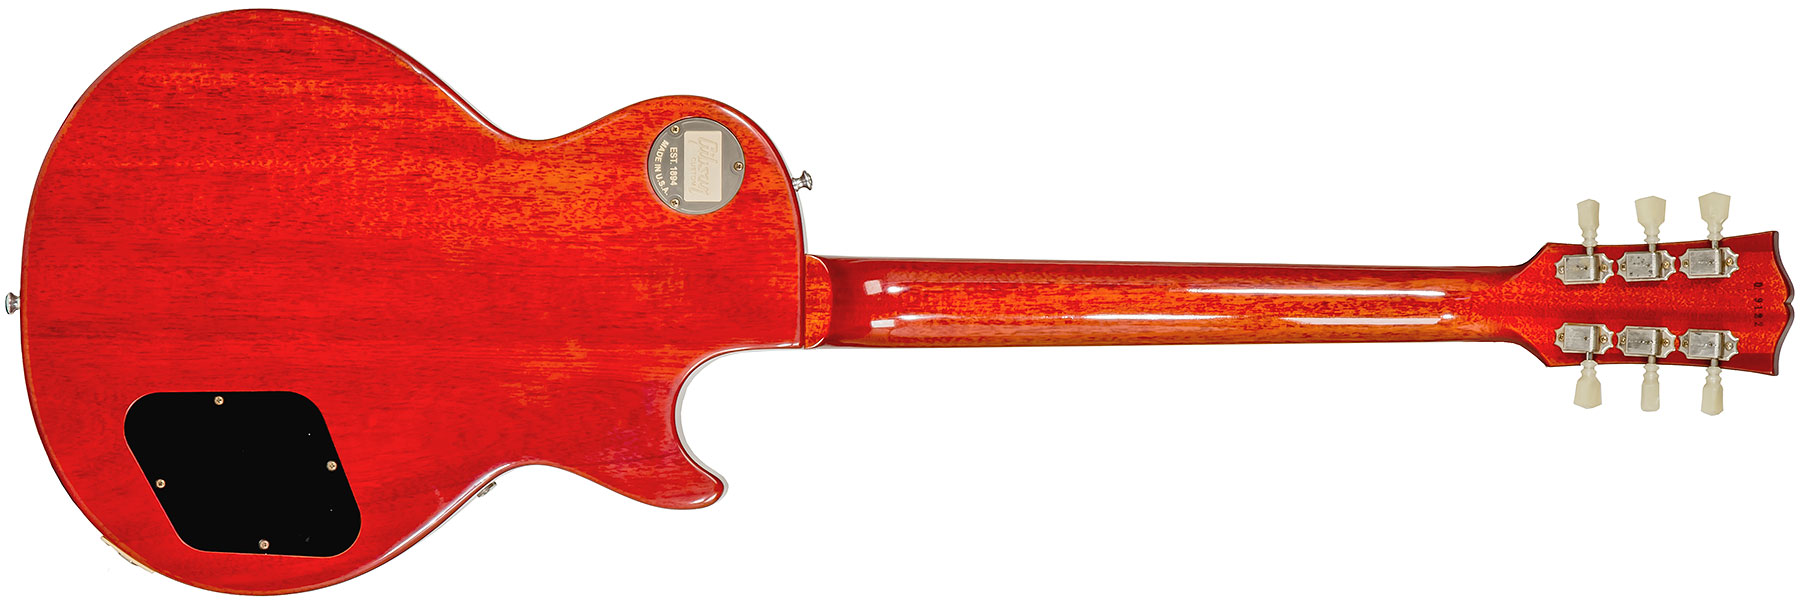 Gibson Custom Shop Les Paul Standard 1960 Reissue Lh Gaucher 2h Ht Rw #09122 - Vos Tangerine Burst - Left-handed electric guitar - Variation 1